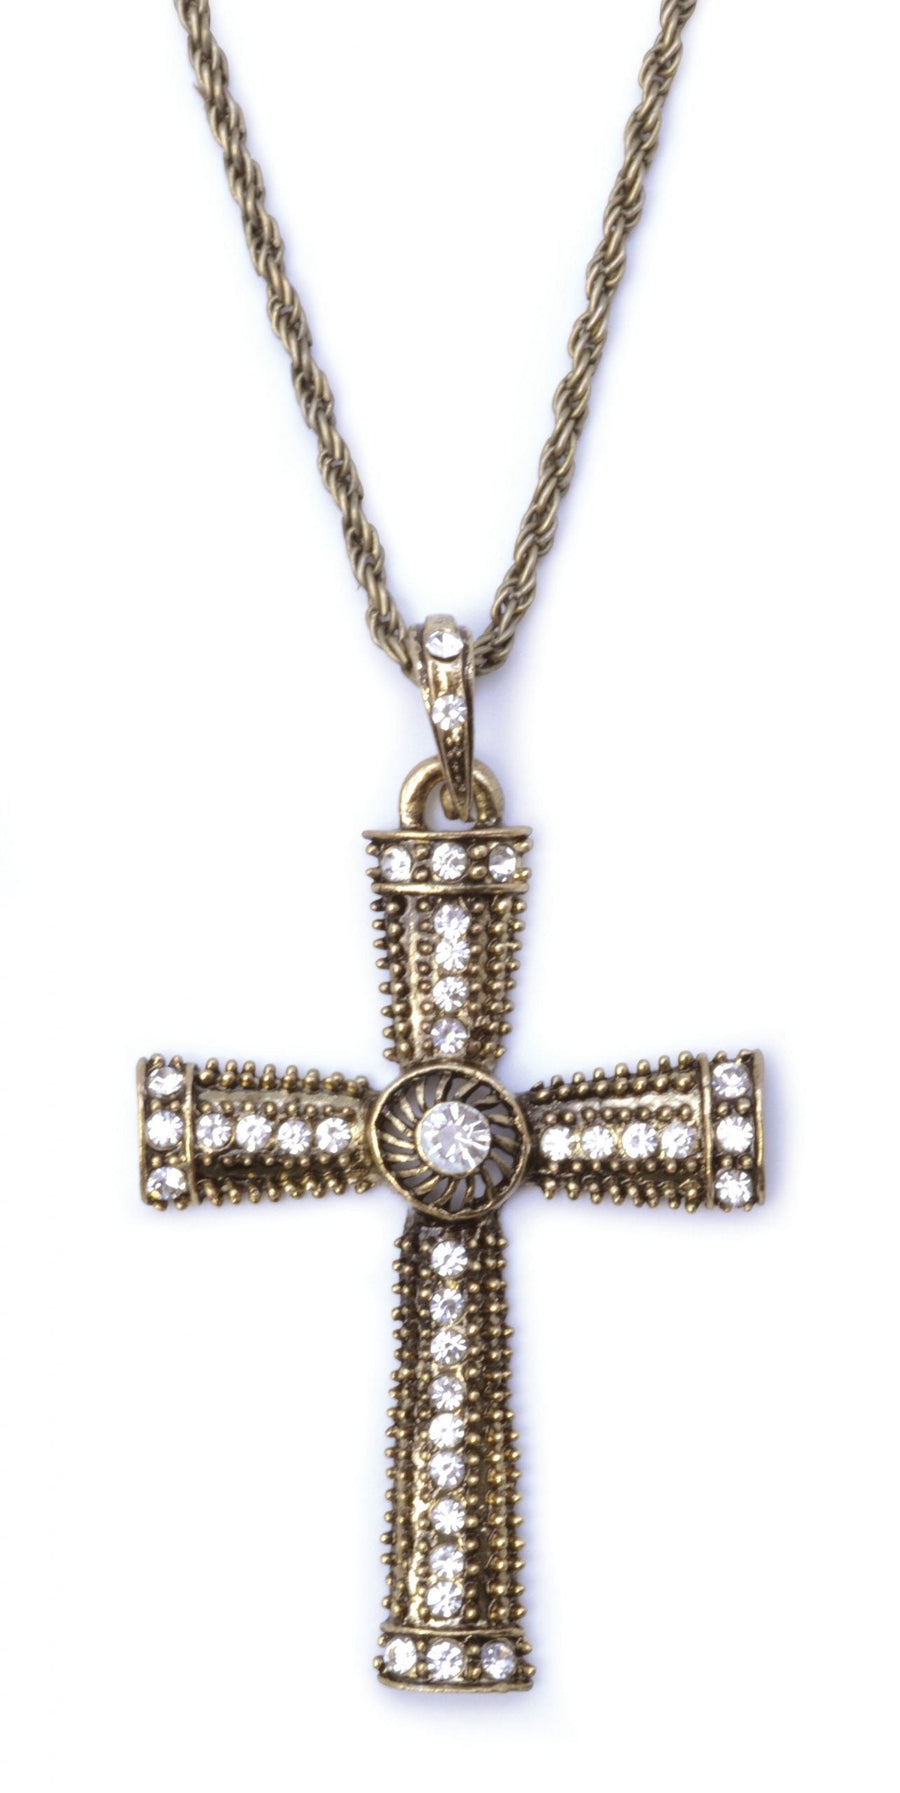 Jewelled Cross Necklace Costume Accessories Unisex_1 BA921